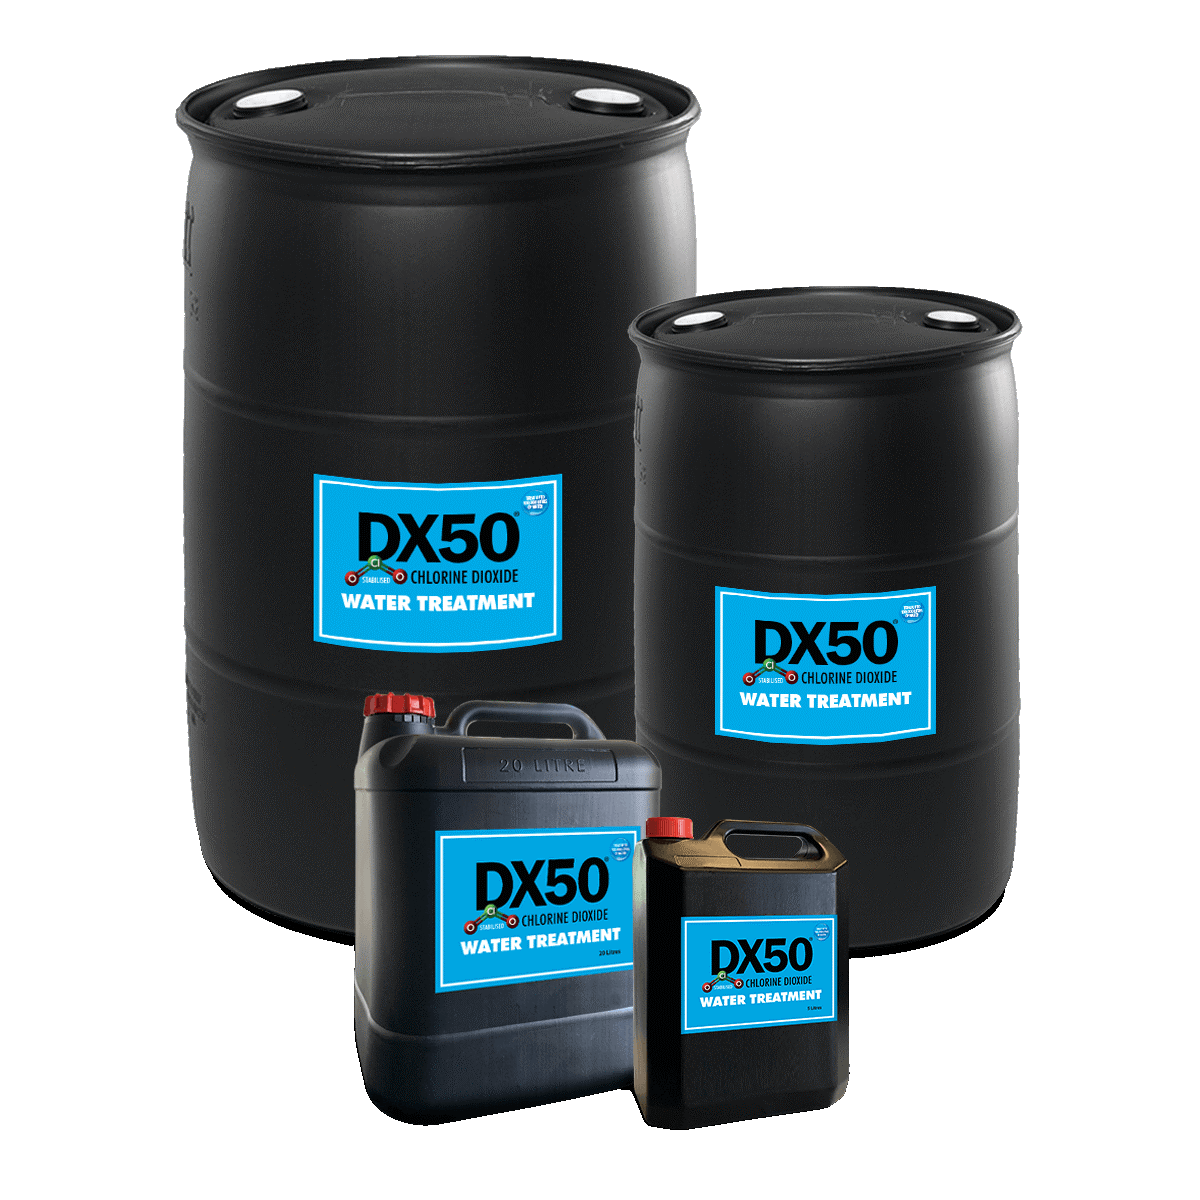 DX50 Water Tank Treatment - DX50 Chlorine Dioxide